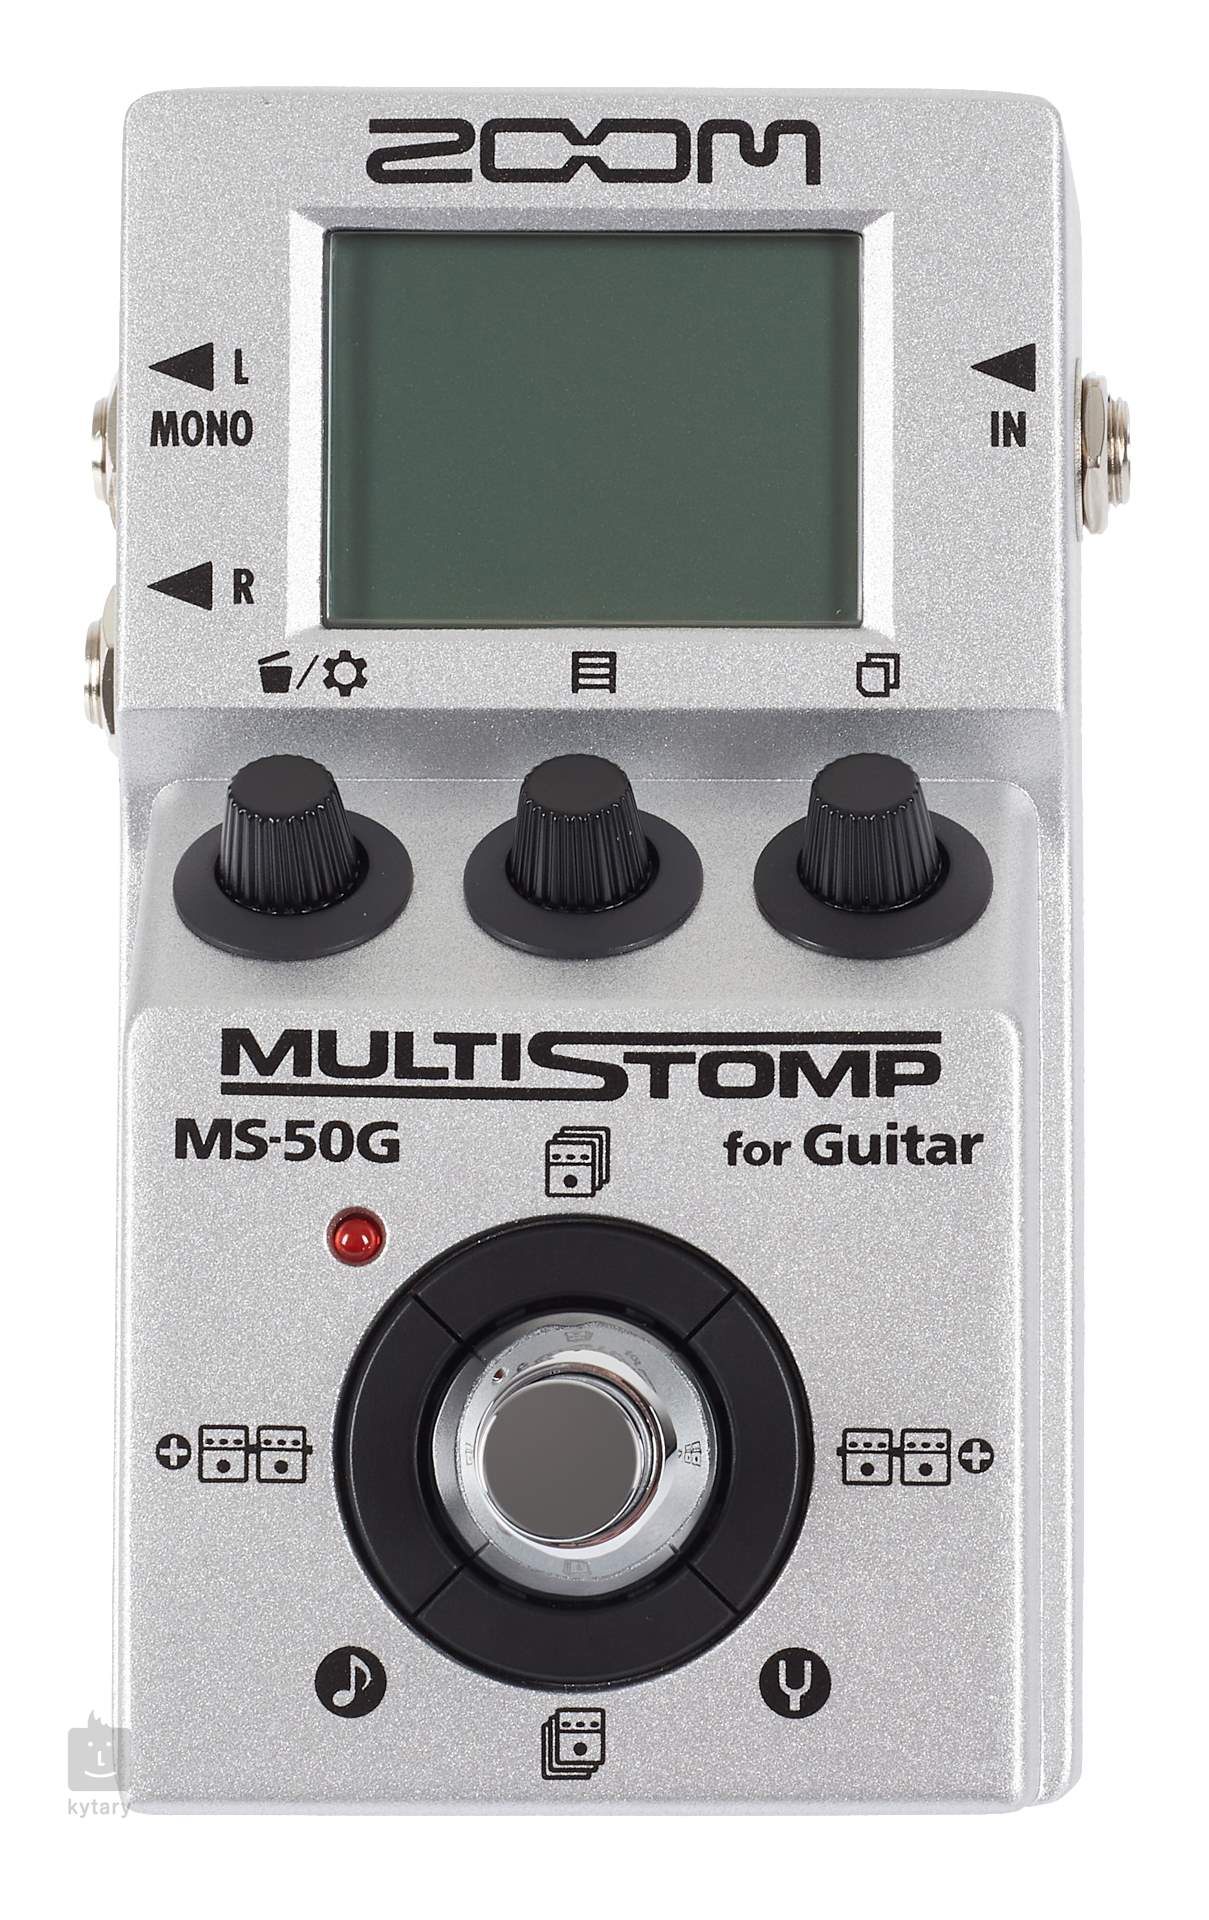 Zoom MULTI STOMP MS-50G for Guitar